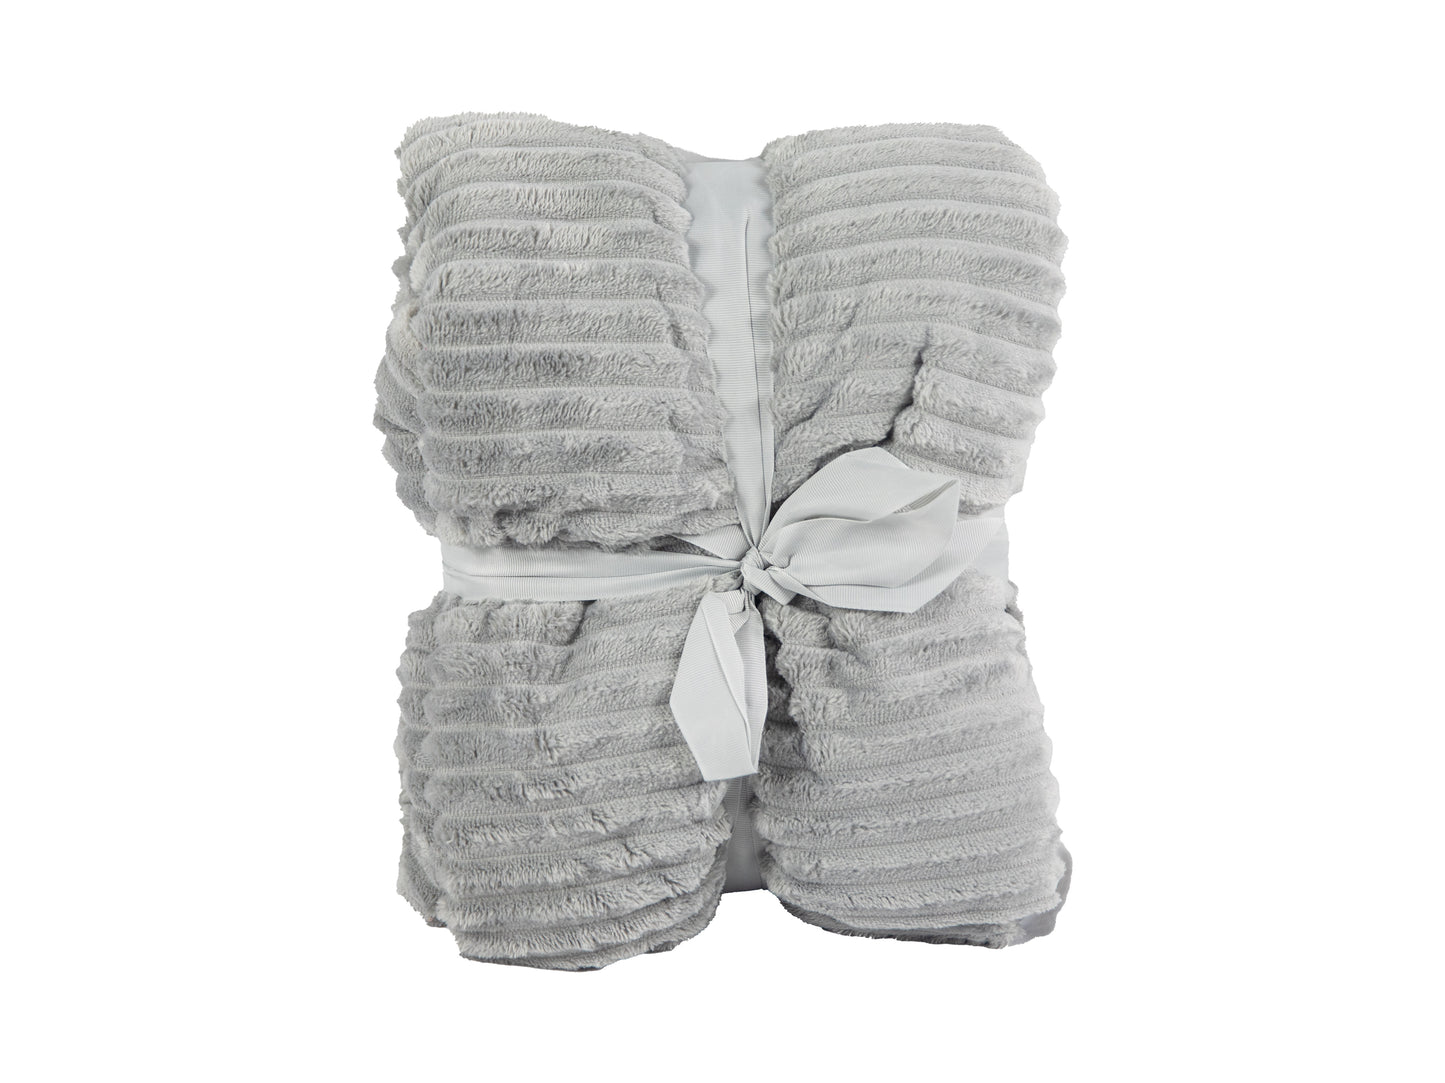 Luxury Modern Fleece Solid Striped Design Throw Blanket (Off White/Cream, Light Gray, Dark Gray Turquoise) Soft Plush Blanket 59 x 78 inches